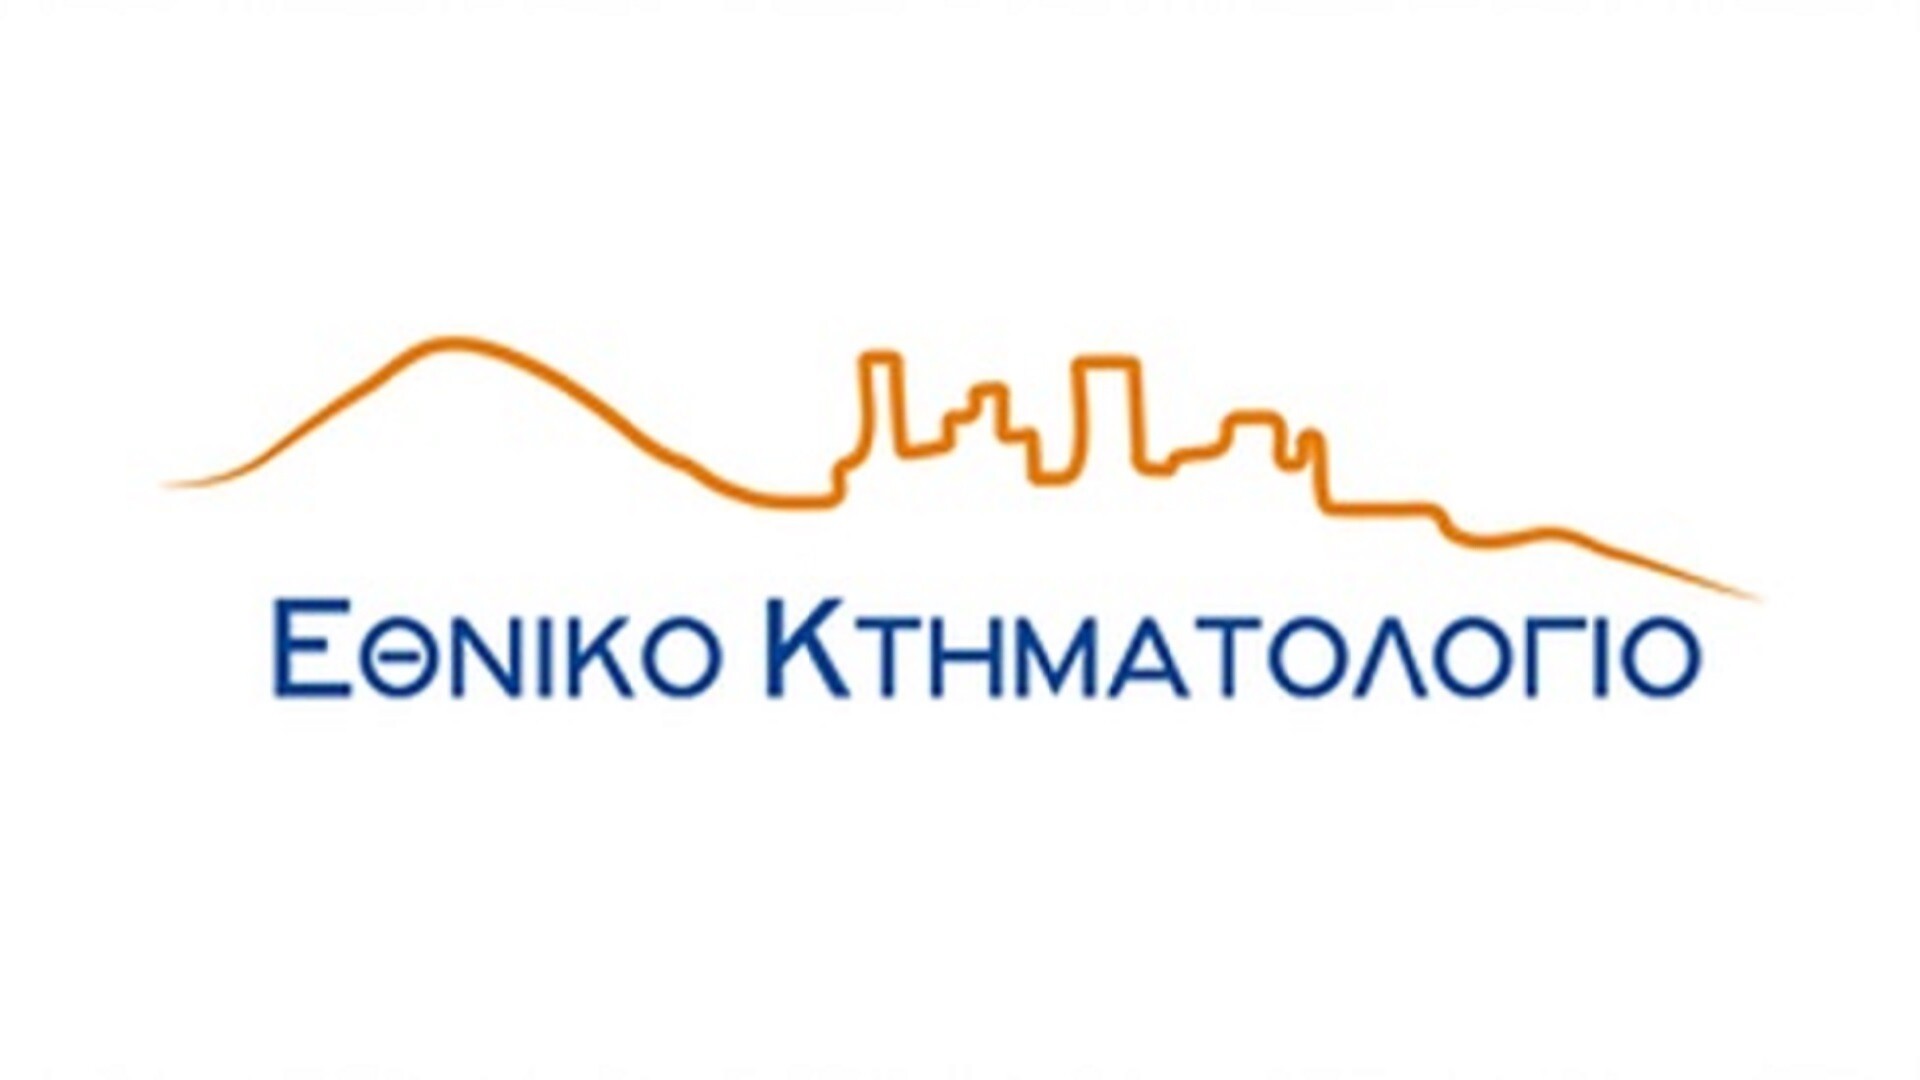 More information about "Λειτουργία Αρχειοφυλακείων Ελληνικού Κτηματολογίου"